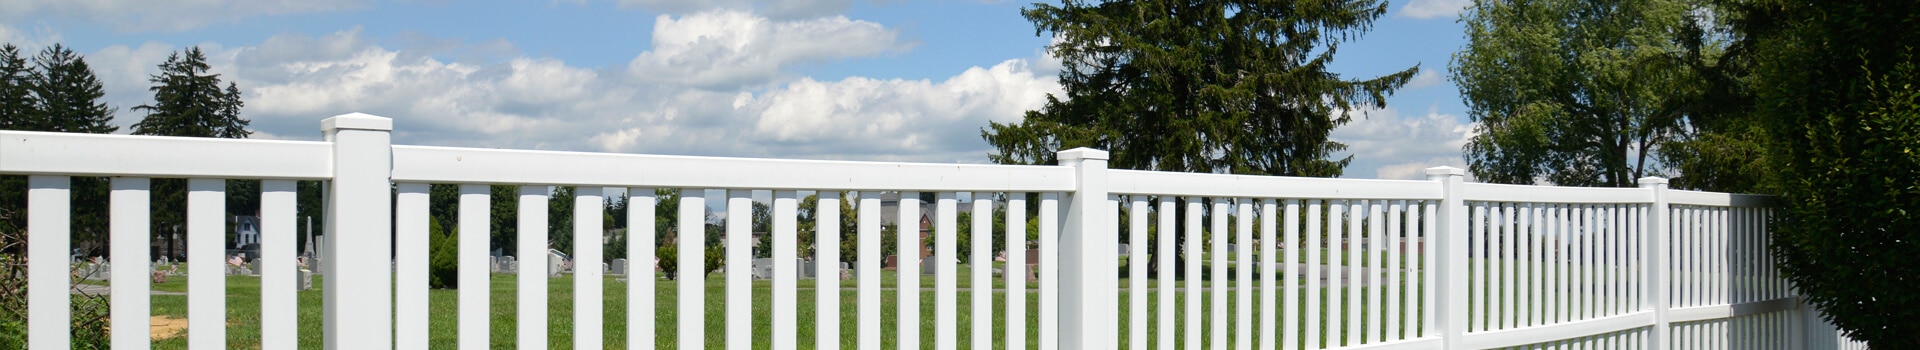 Picket Fence styles - Big Easy Fences